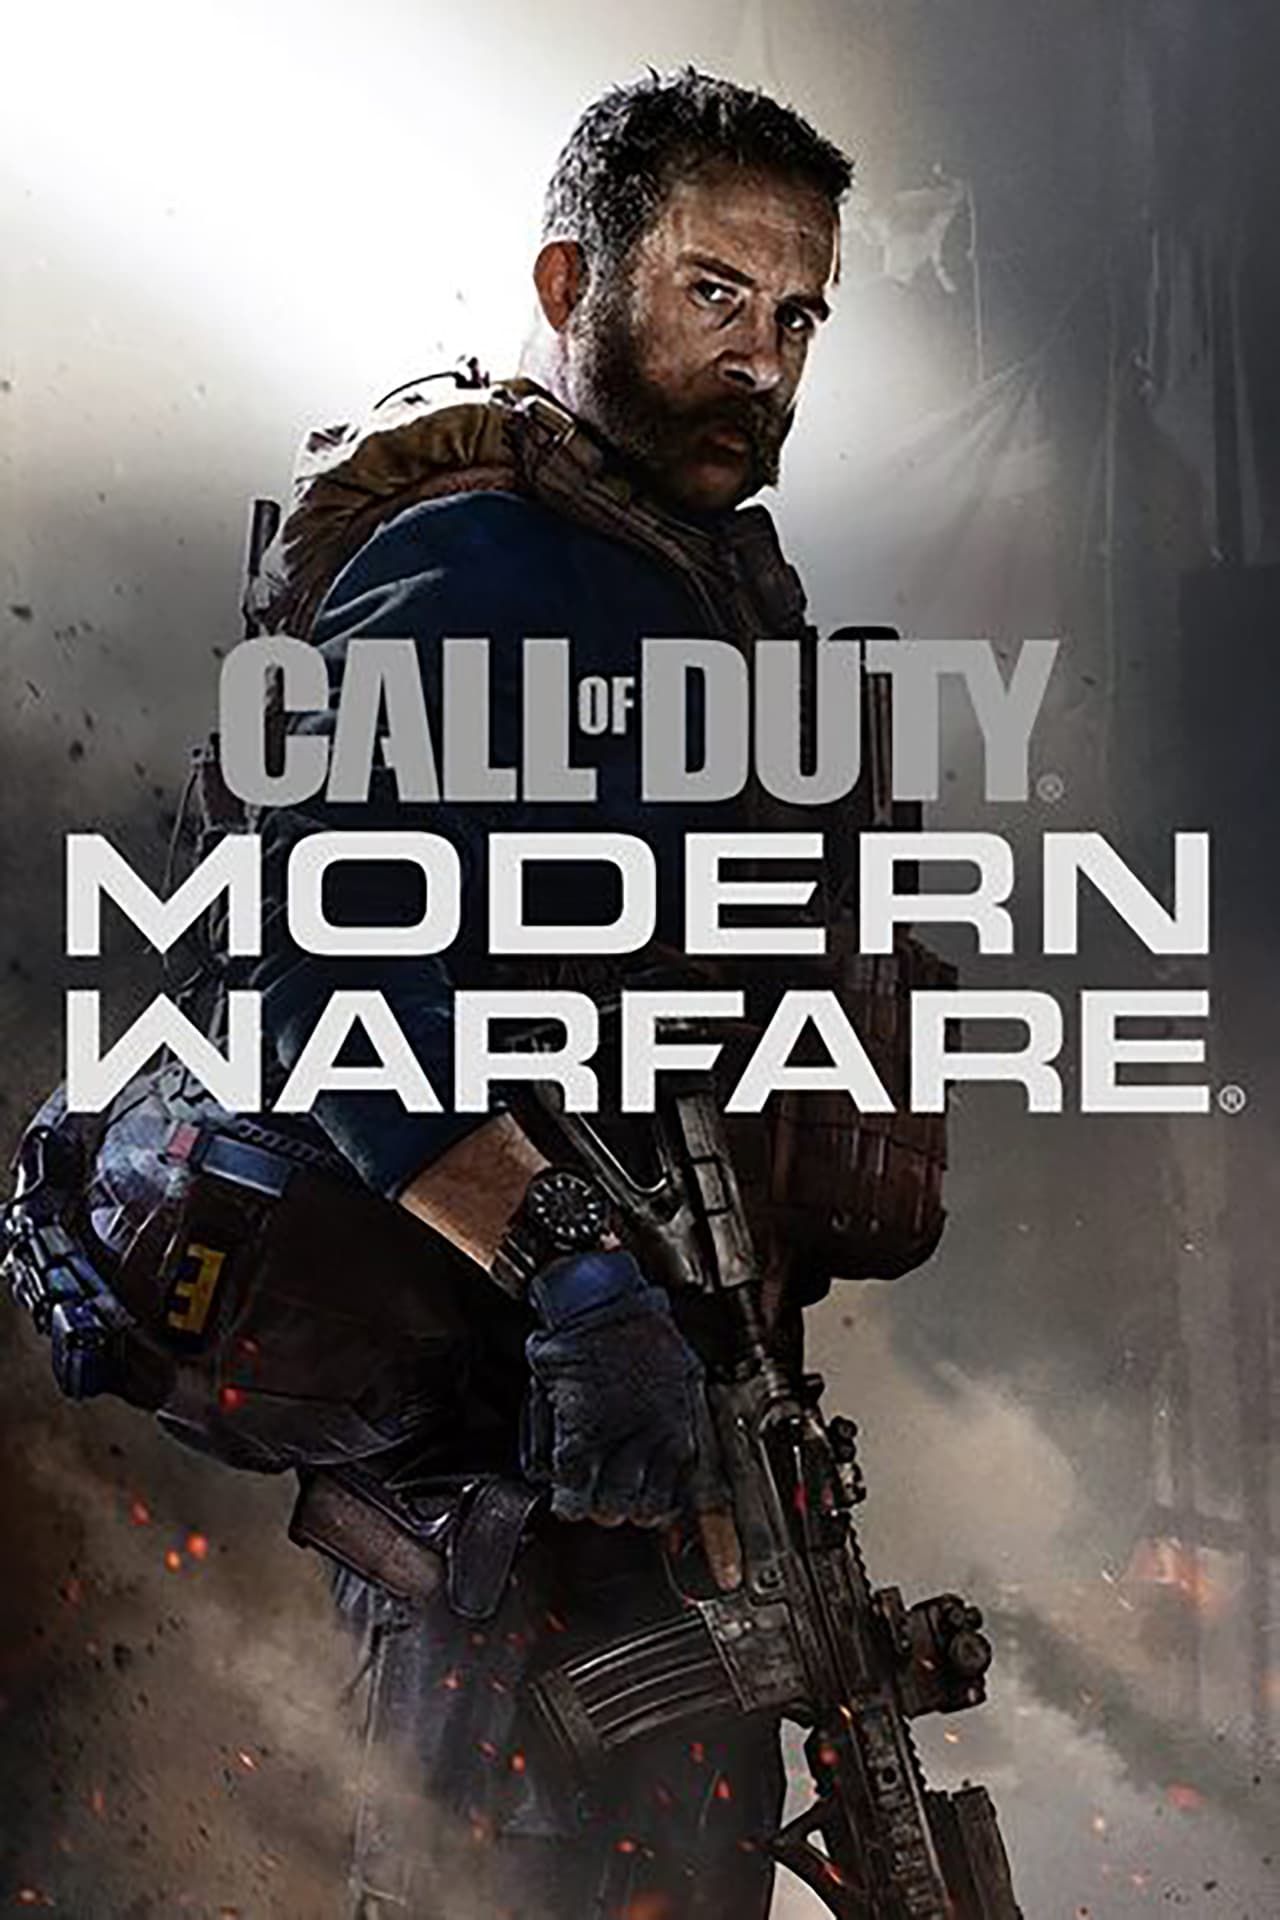 Call of Duty Modern Warfare 2019 Game Poster